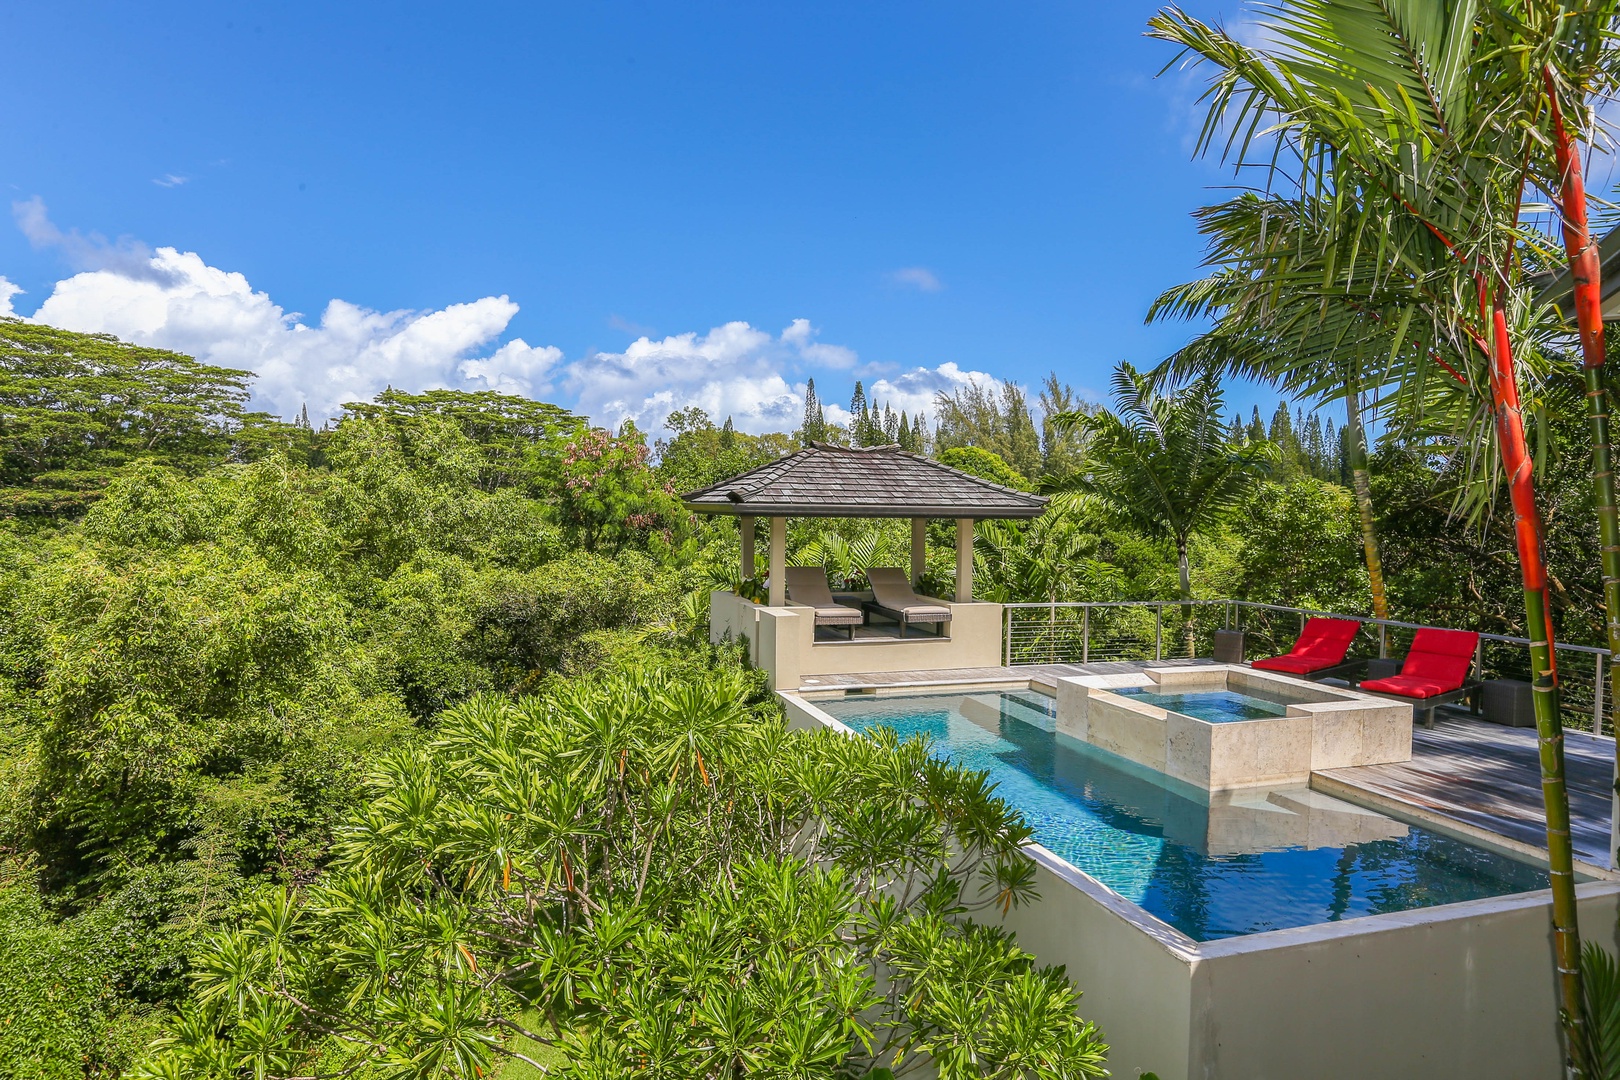 Princeville Vacation Rentals, Laulea Kailani Villa (KAUAI) - Great property to relax